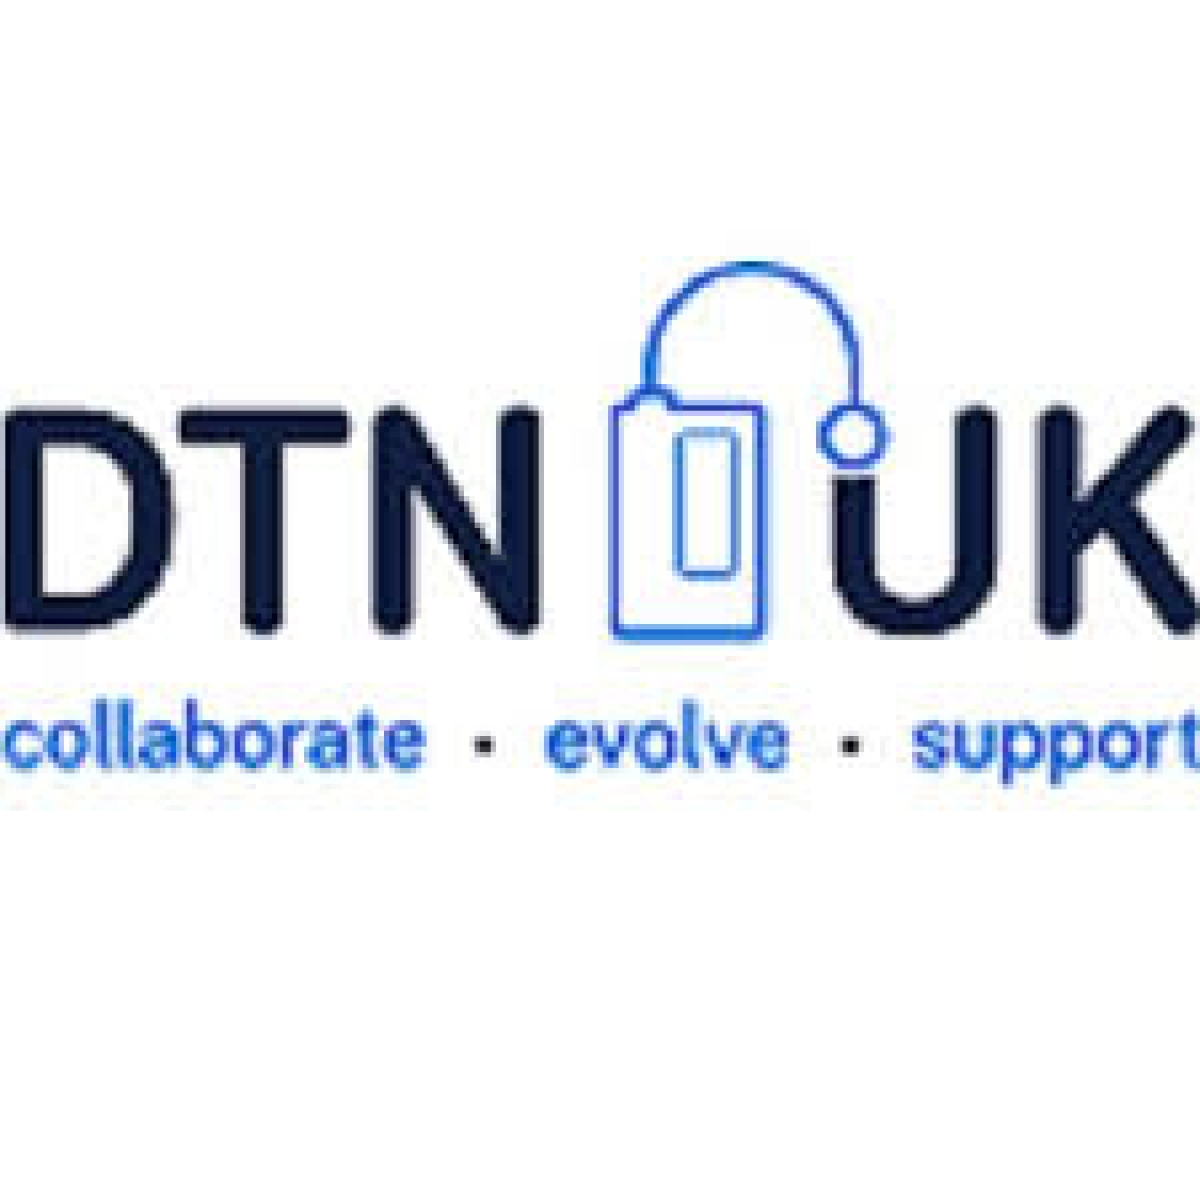 ABCD Diabetes Technology Network UK: Team Education Days